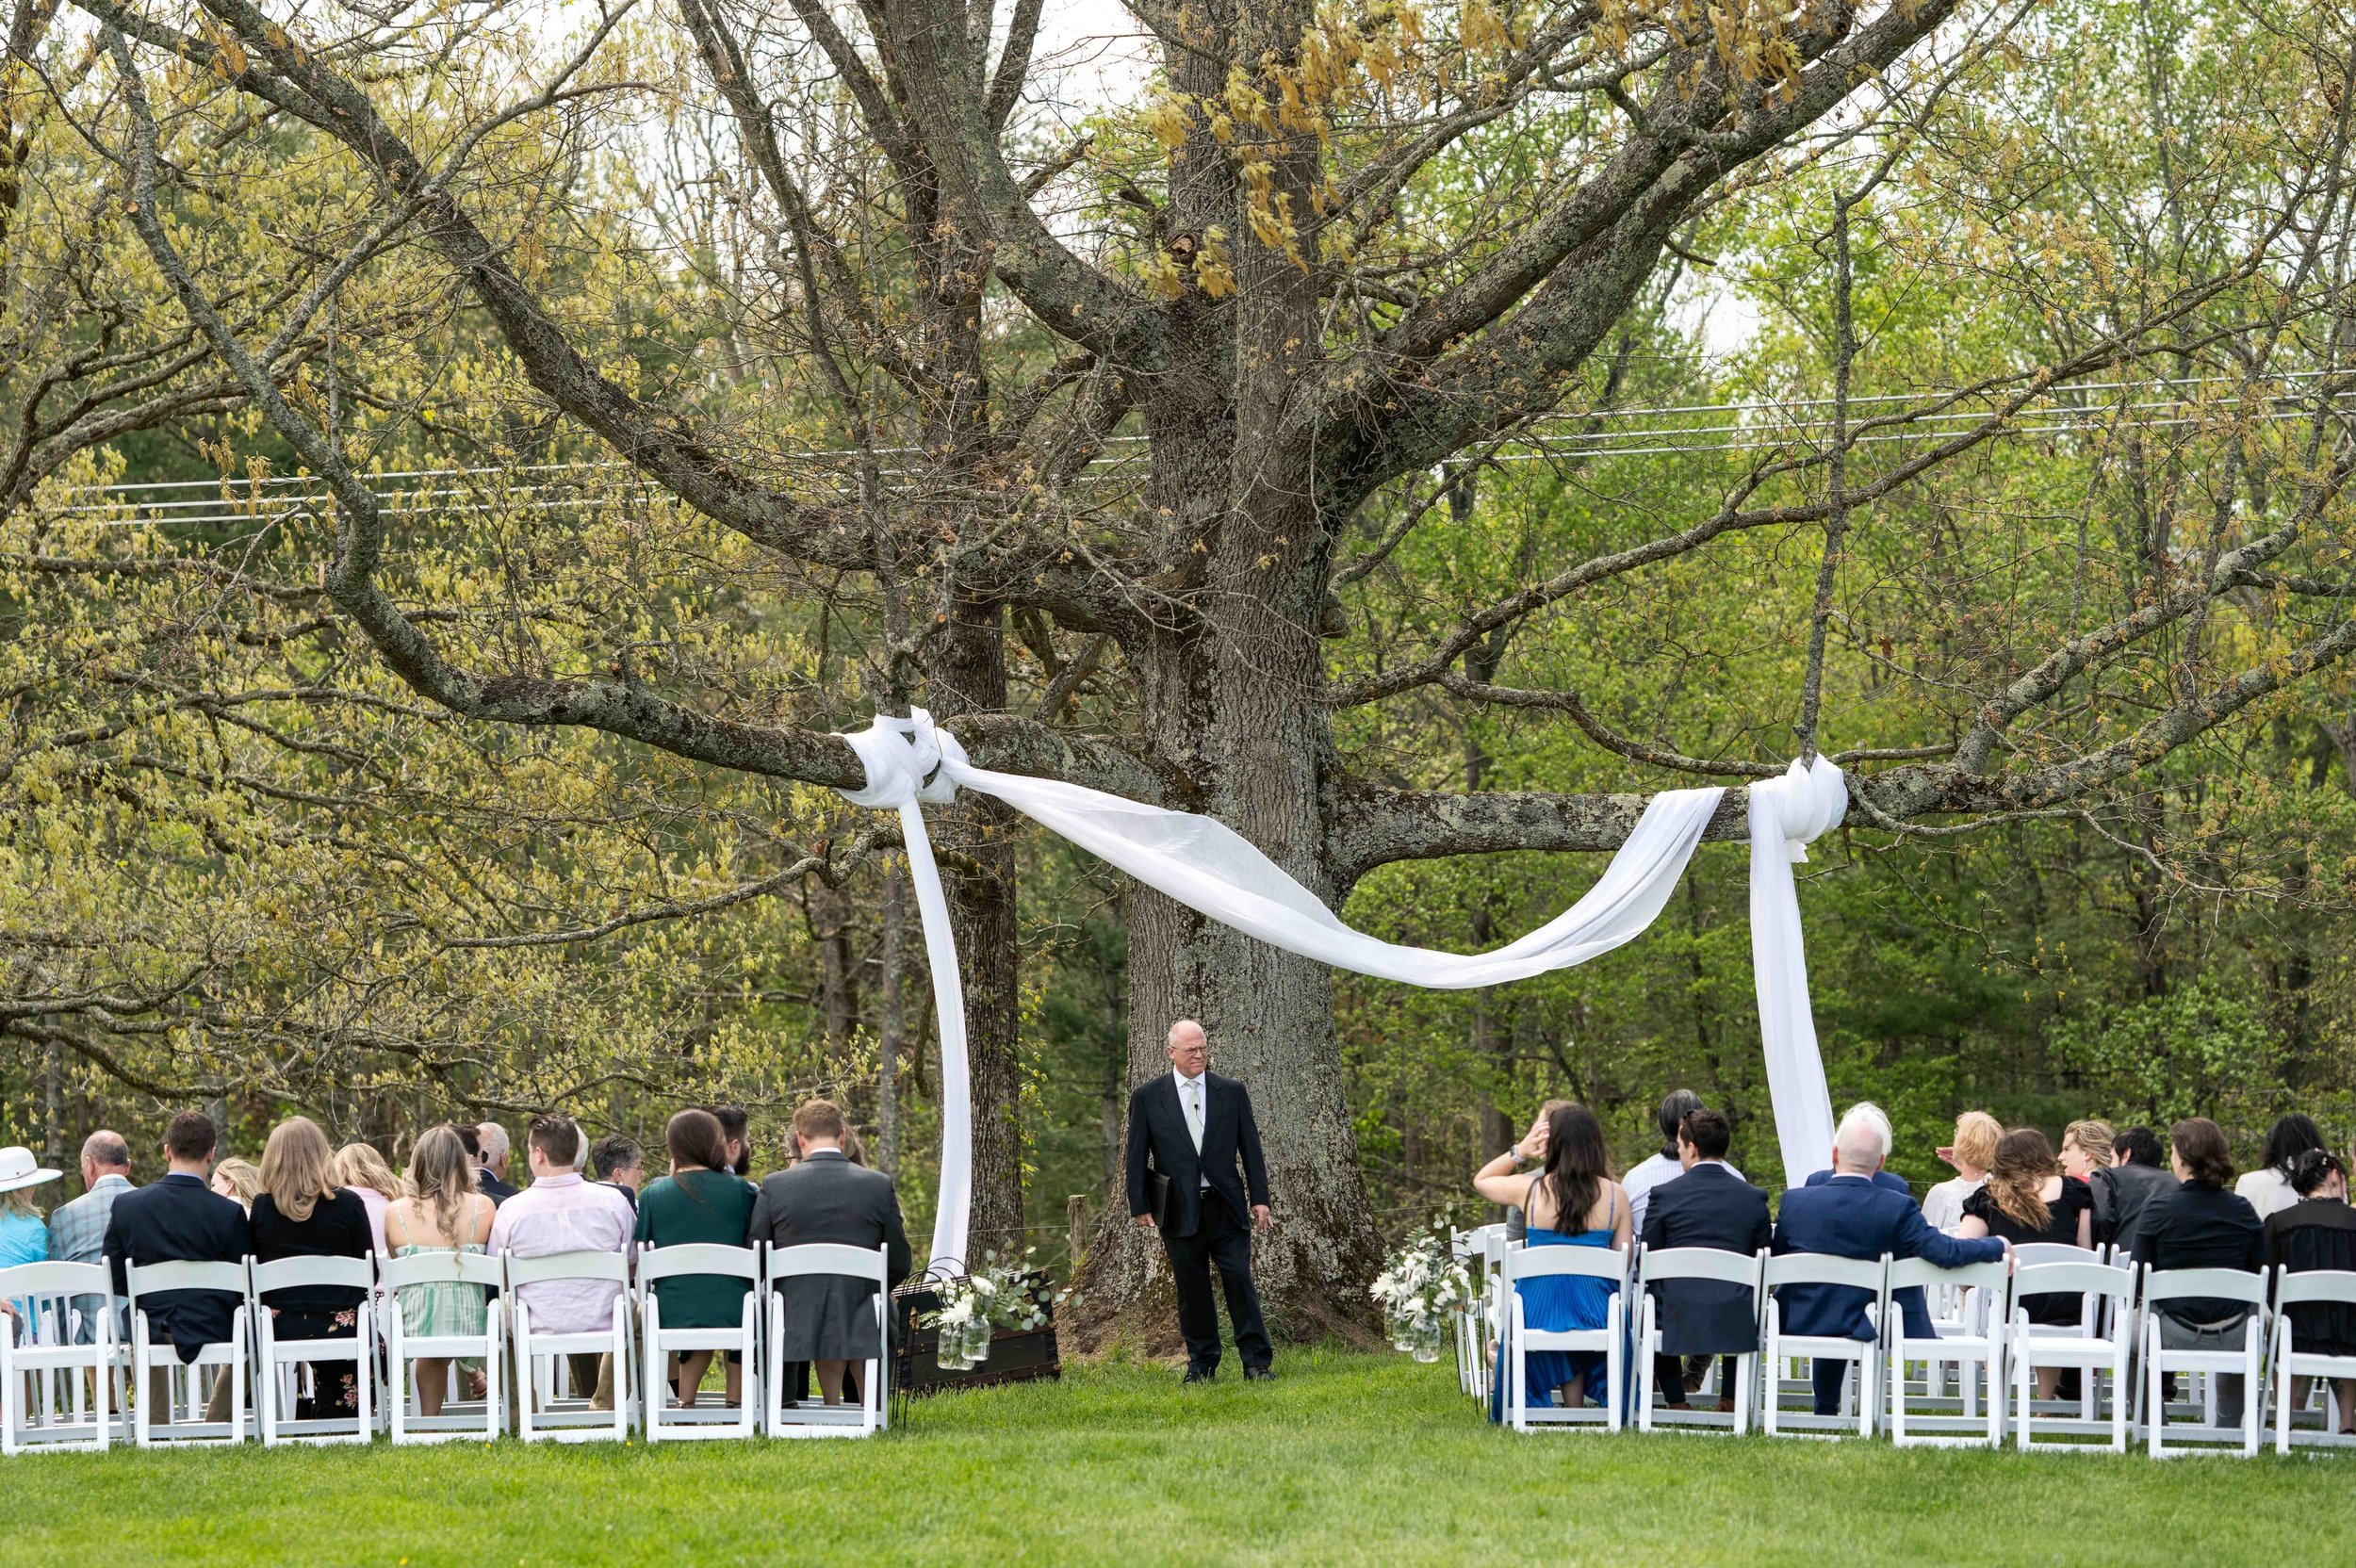 Outdoor April Wedding in Asheville North Carolina at Emerald Ridge Farm & Event Center blog 1 28.jpg